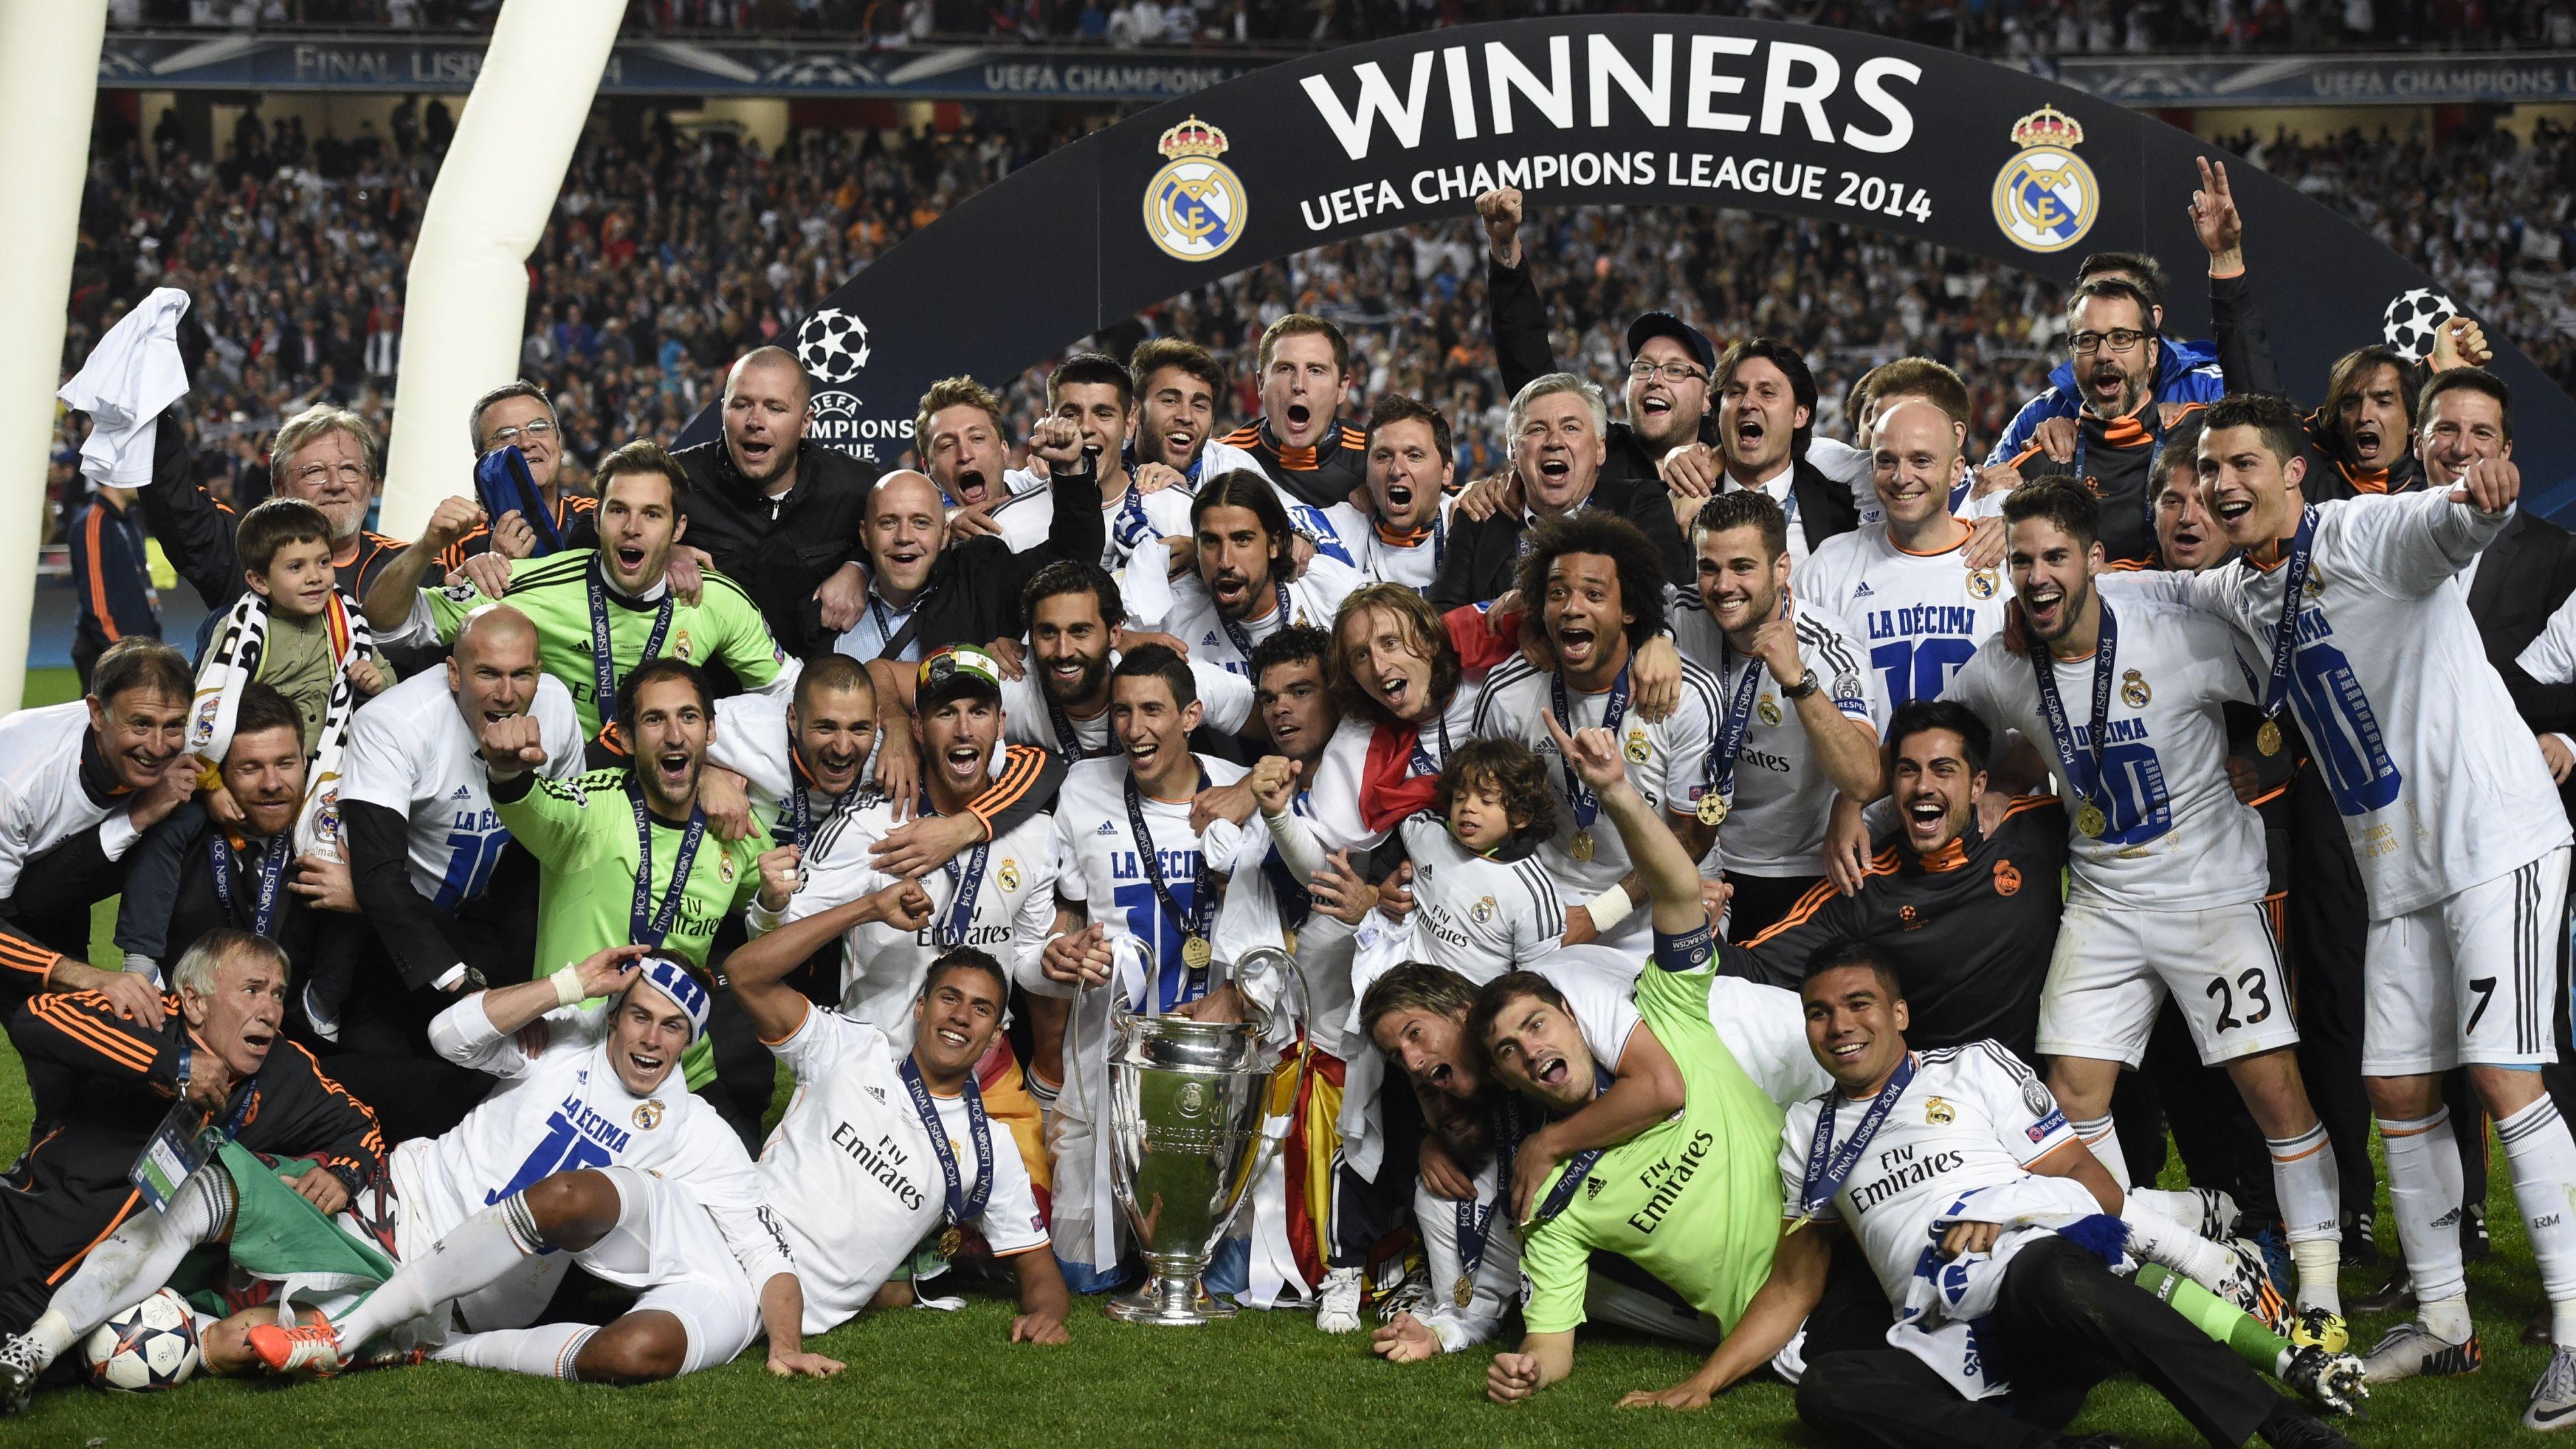 Real Madrid winners Champions League 2014 wallpaper